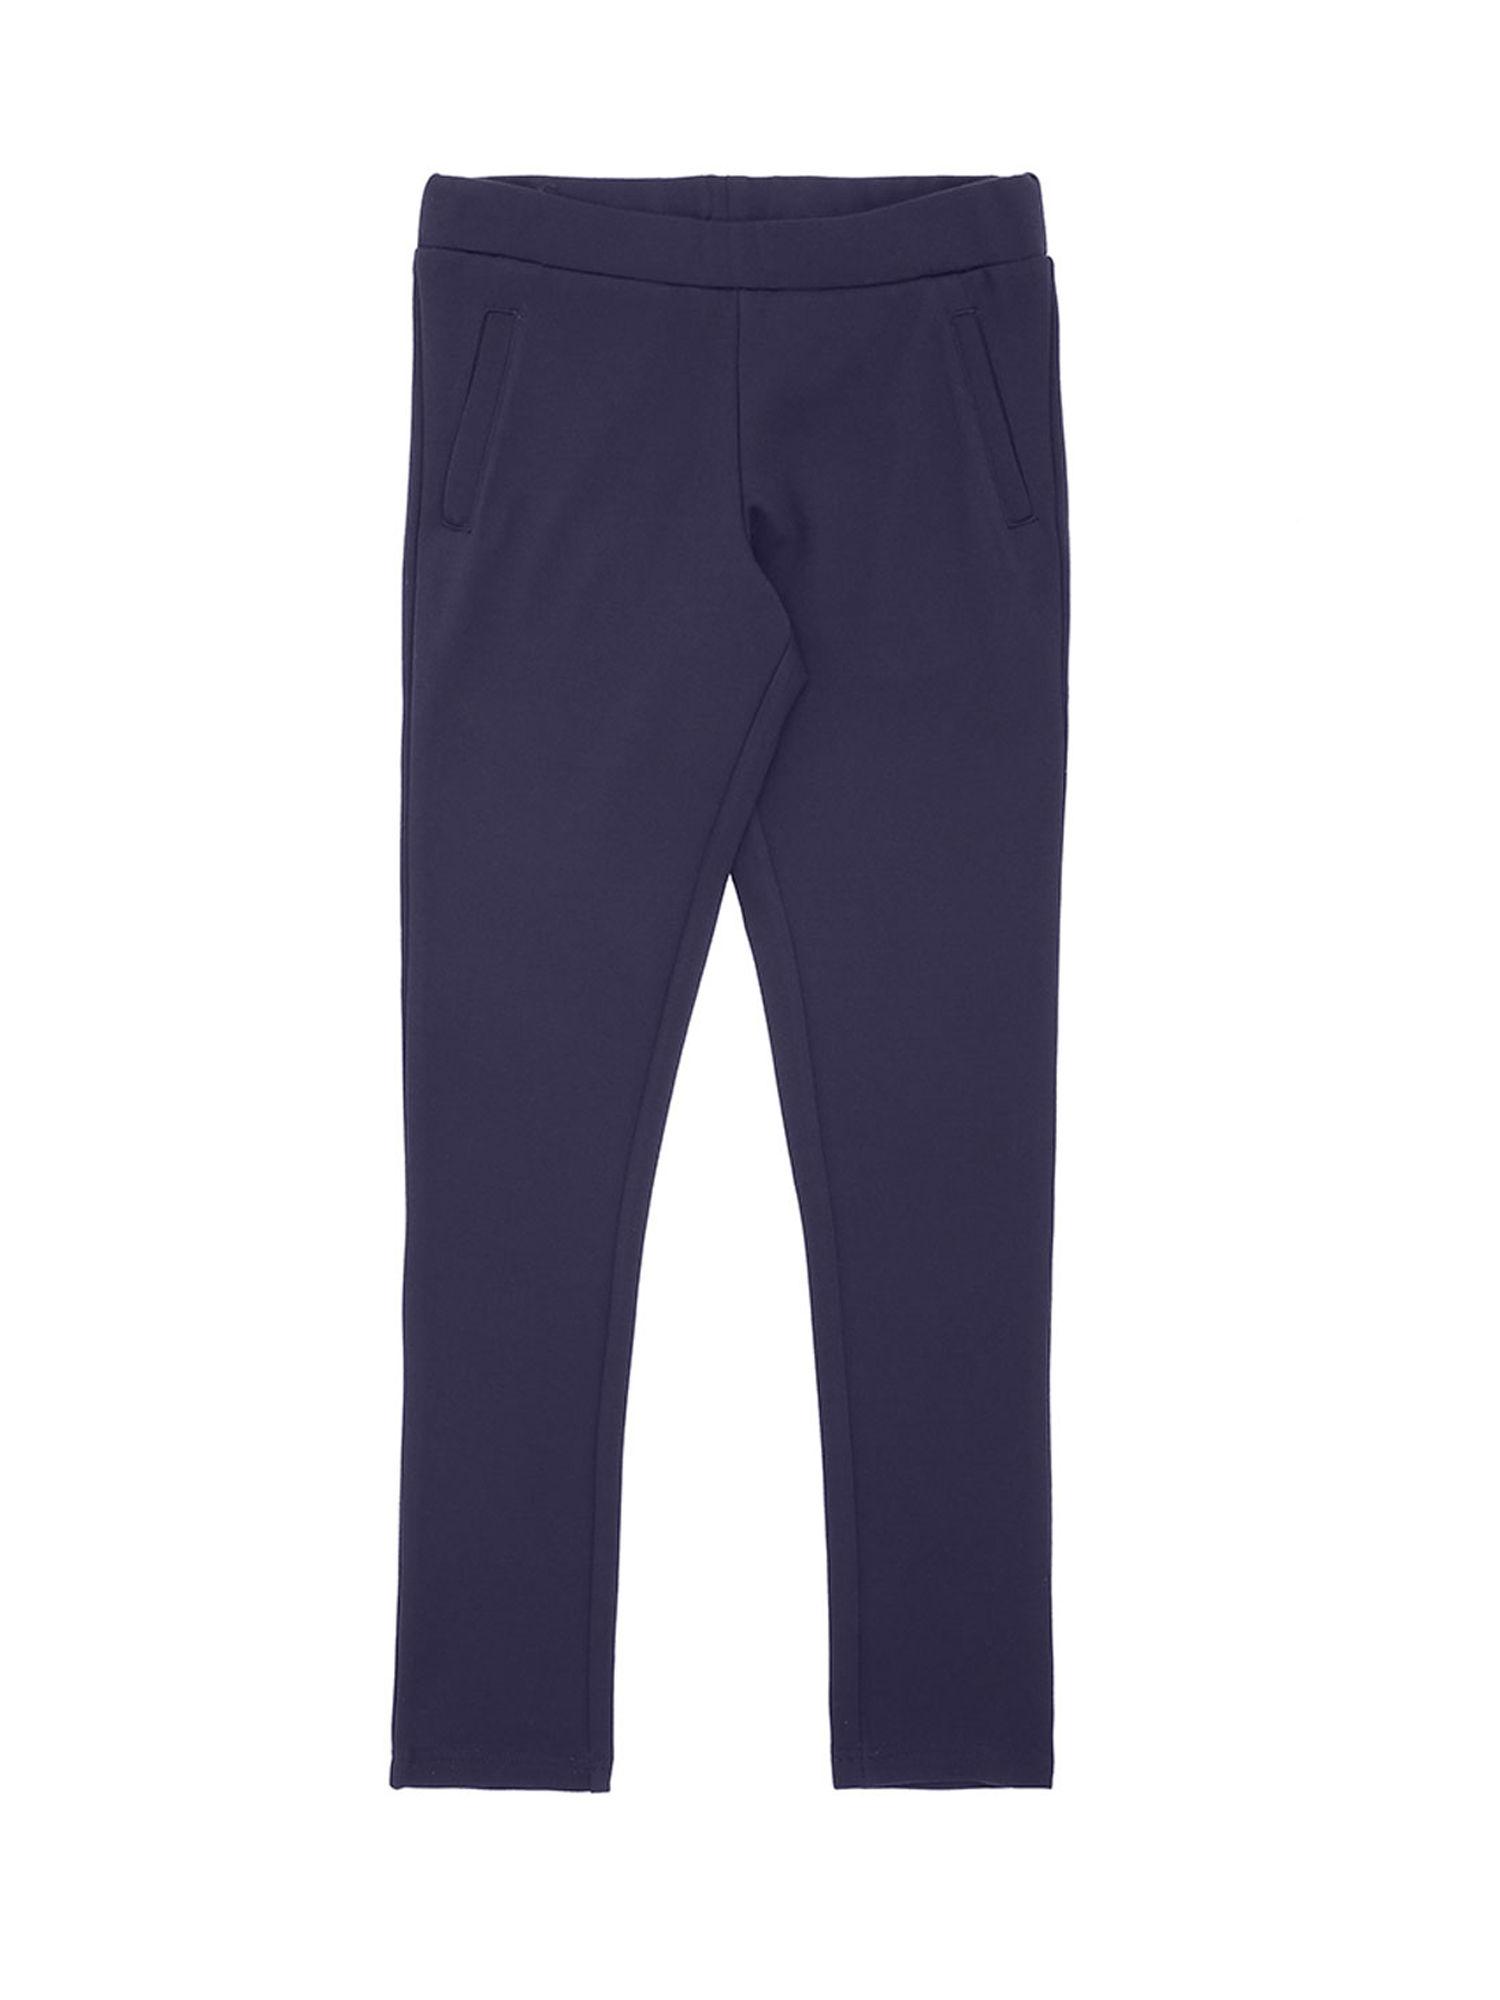 navy blue skinny fit trouser